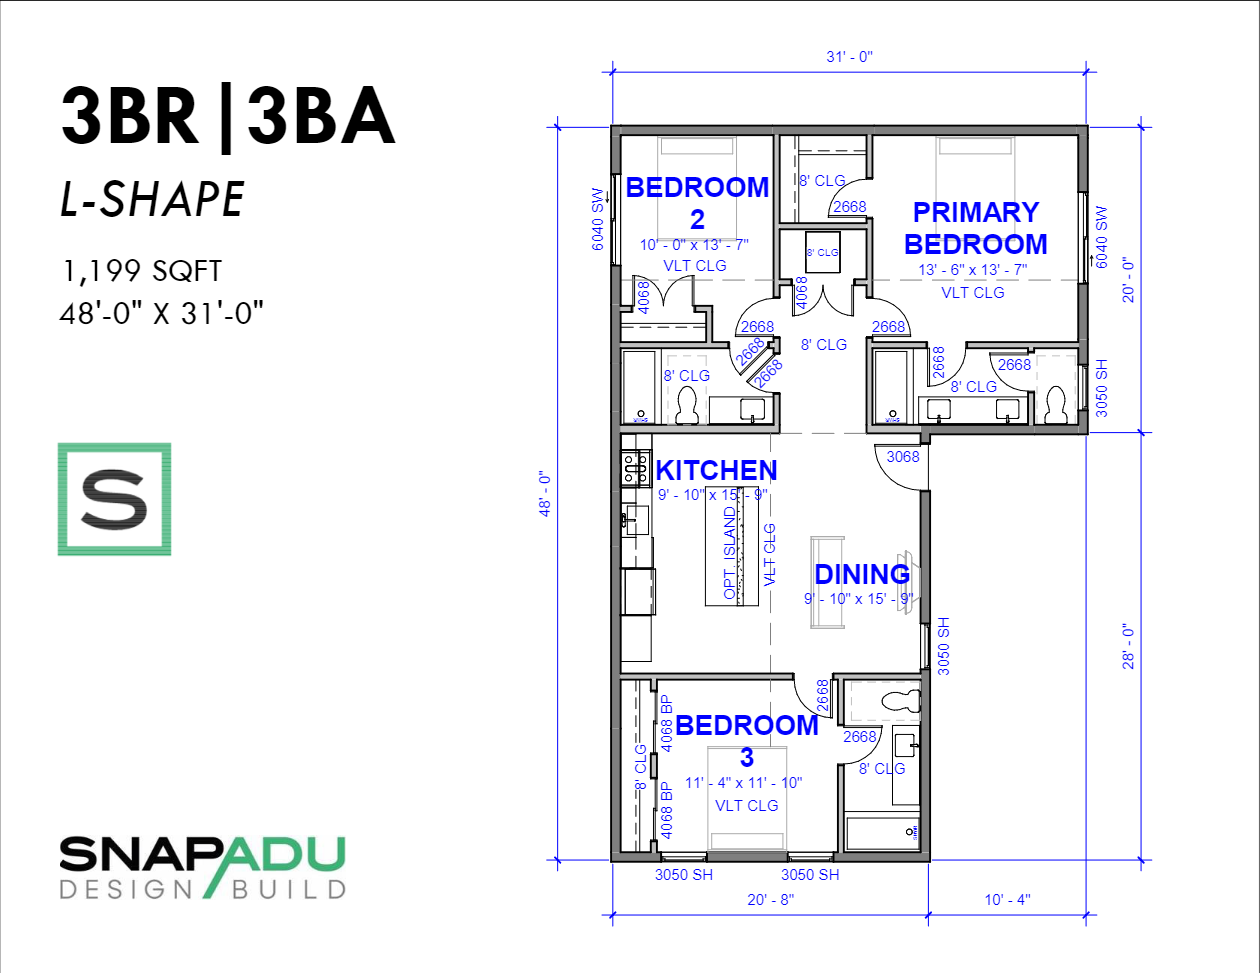 3BR 3BA 1199 SF 48x31 L-SHAPE Snap ADU Floor Plan 3 Bedroom 1200 sqft